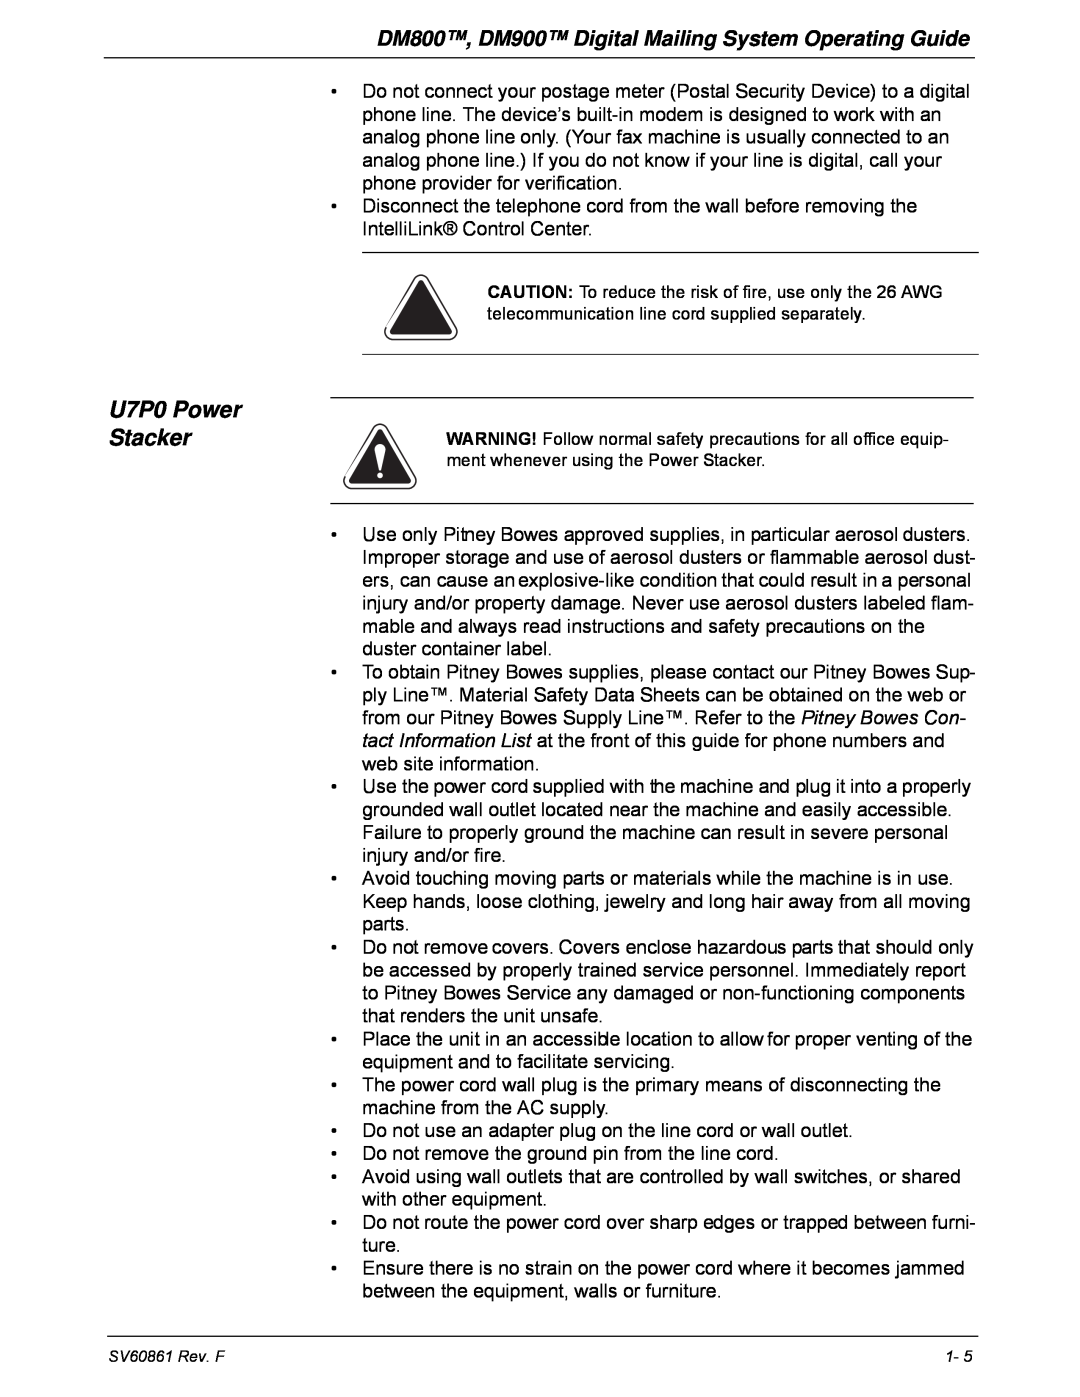 Pitney Bowes manual U7P0 Power Stacker, DM800, DM900 Digital Mailing System Operating Guide 